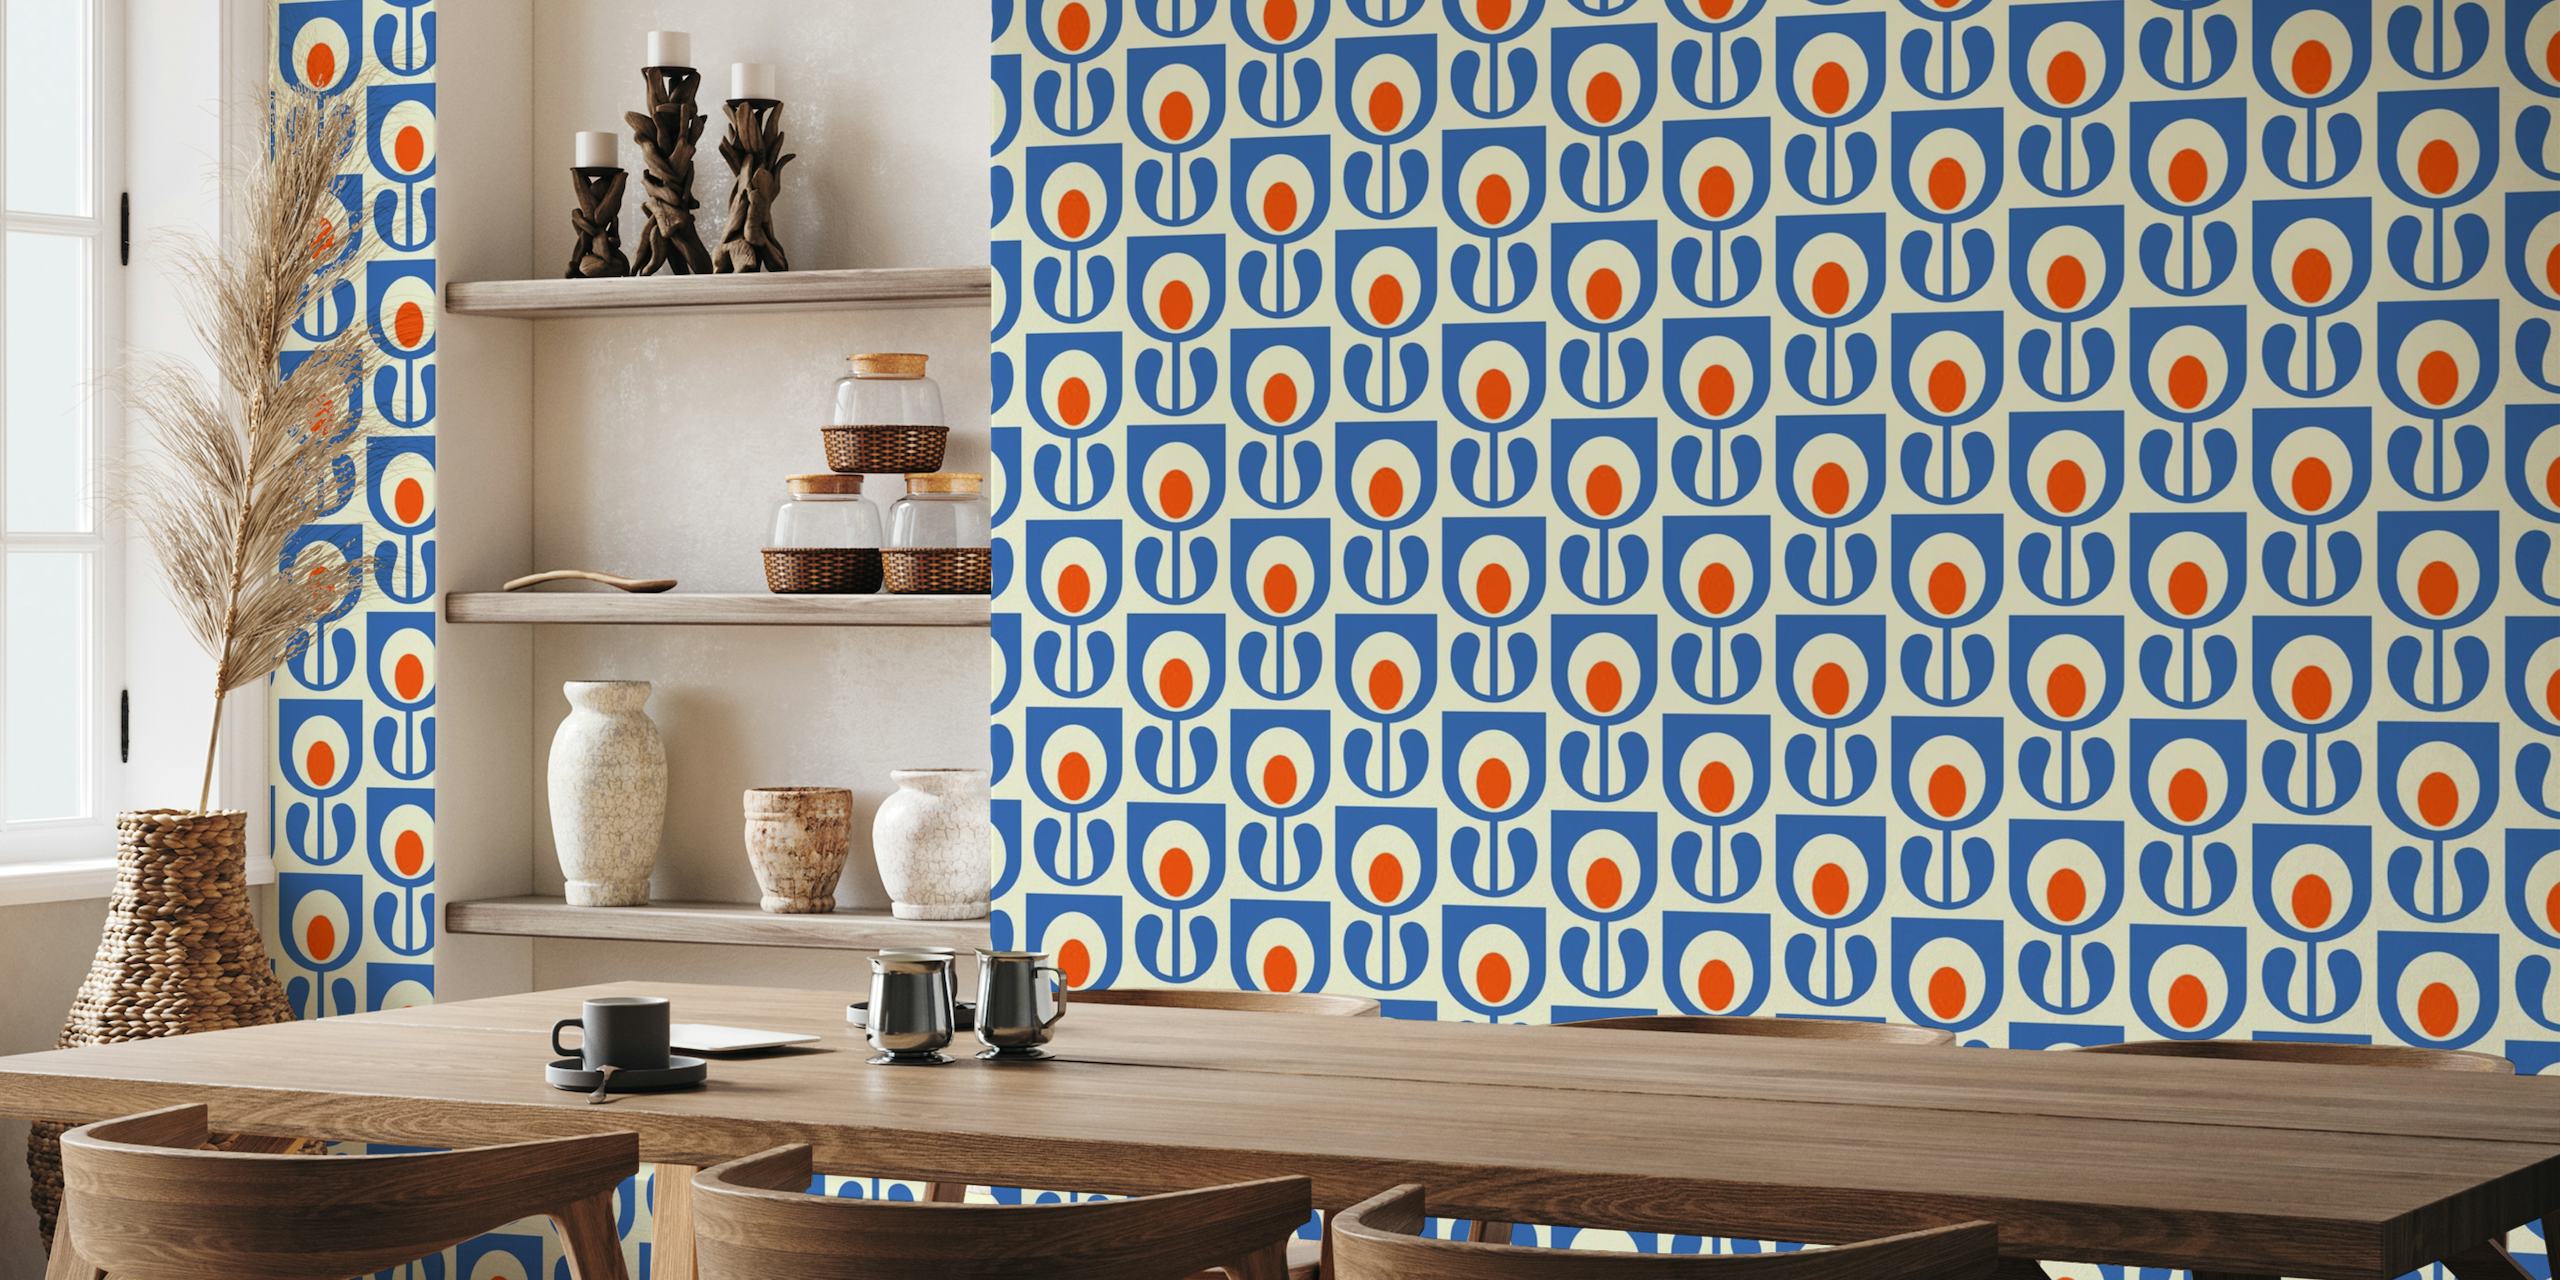 2523 A - retro tulips pattern, blue wallpaper